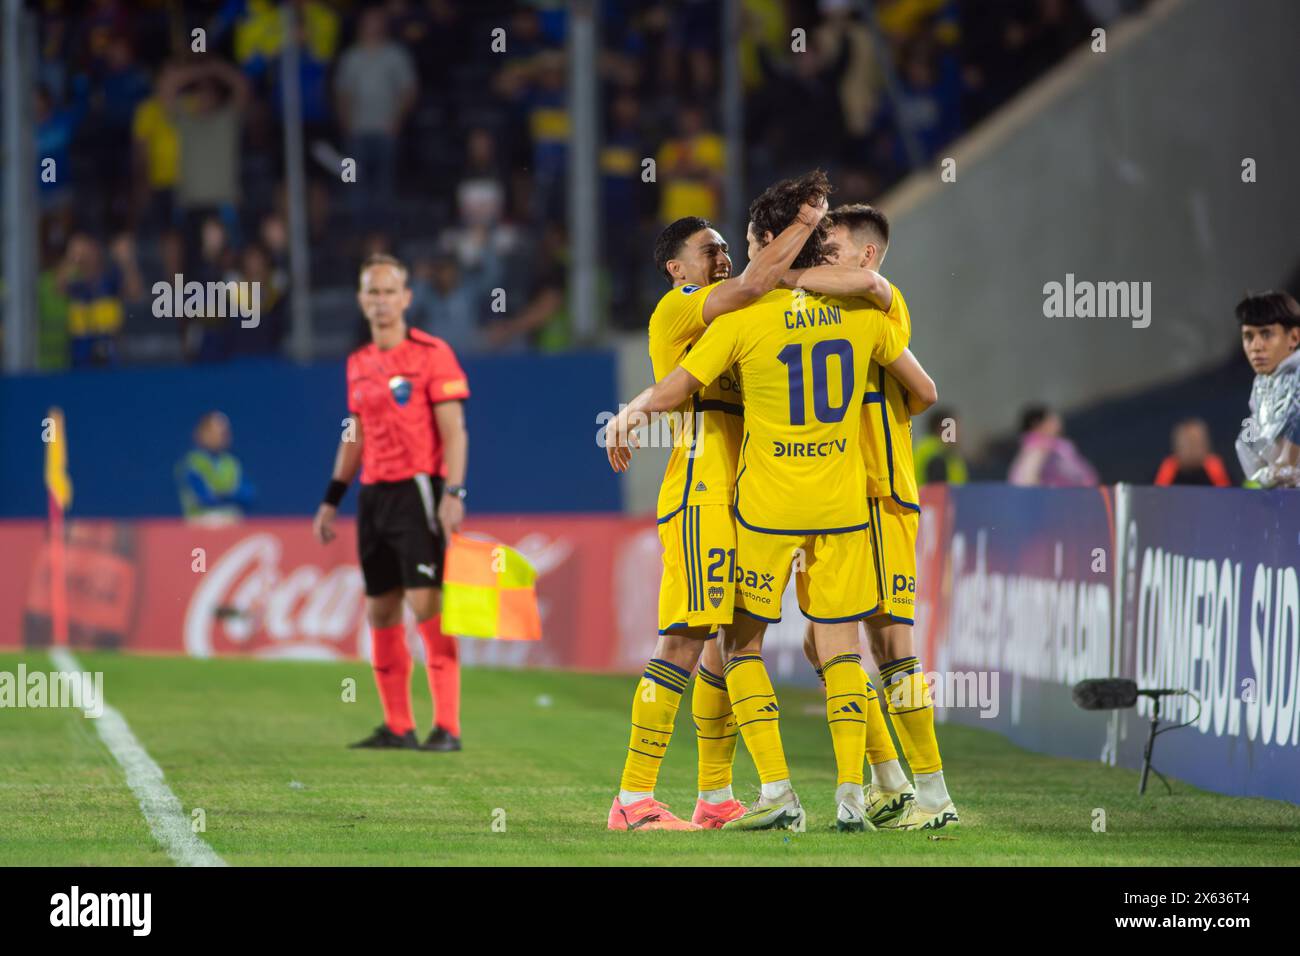 Equi Fernandez, Kevin Zenon, Edinson Cavani celebration after Cavani's goal for Boca Jrs agains Sportivo Trinidense. Stock Photo